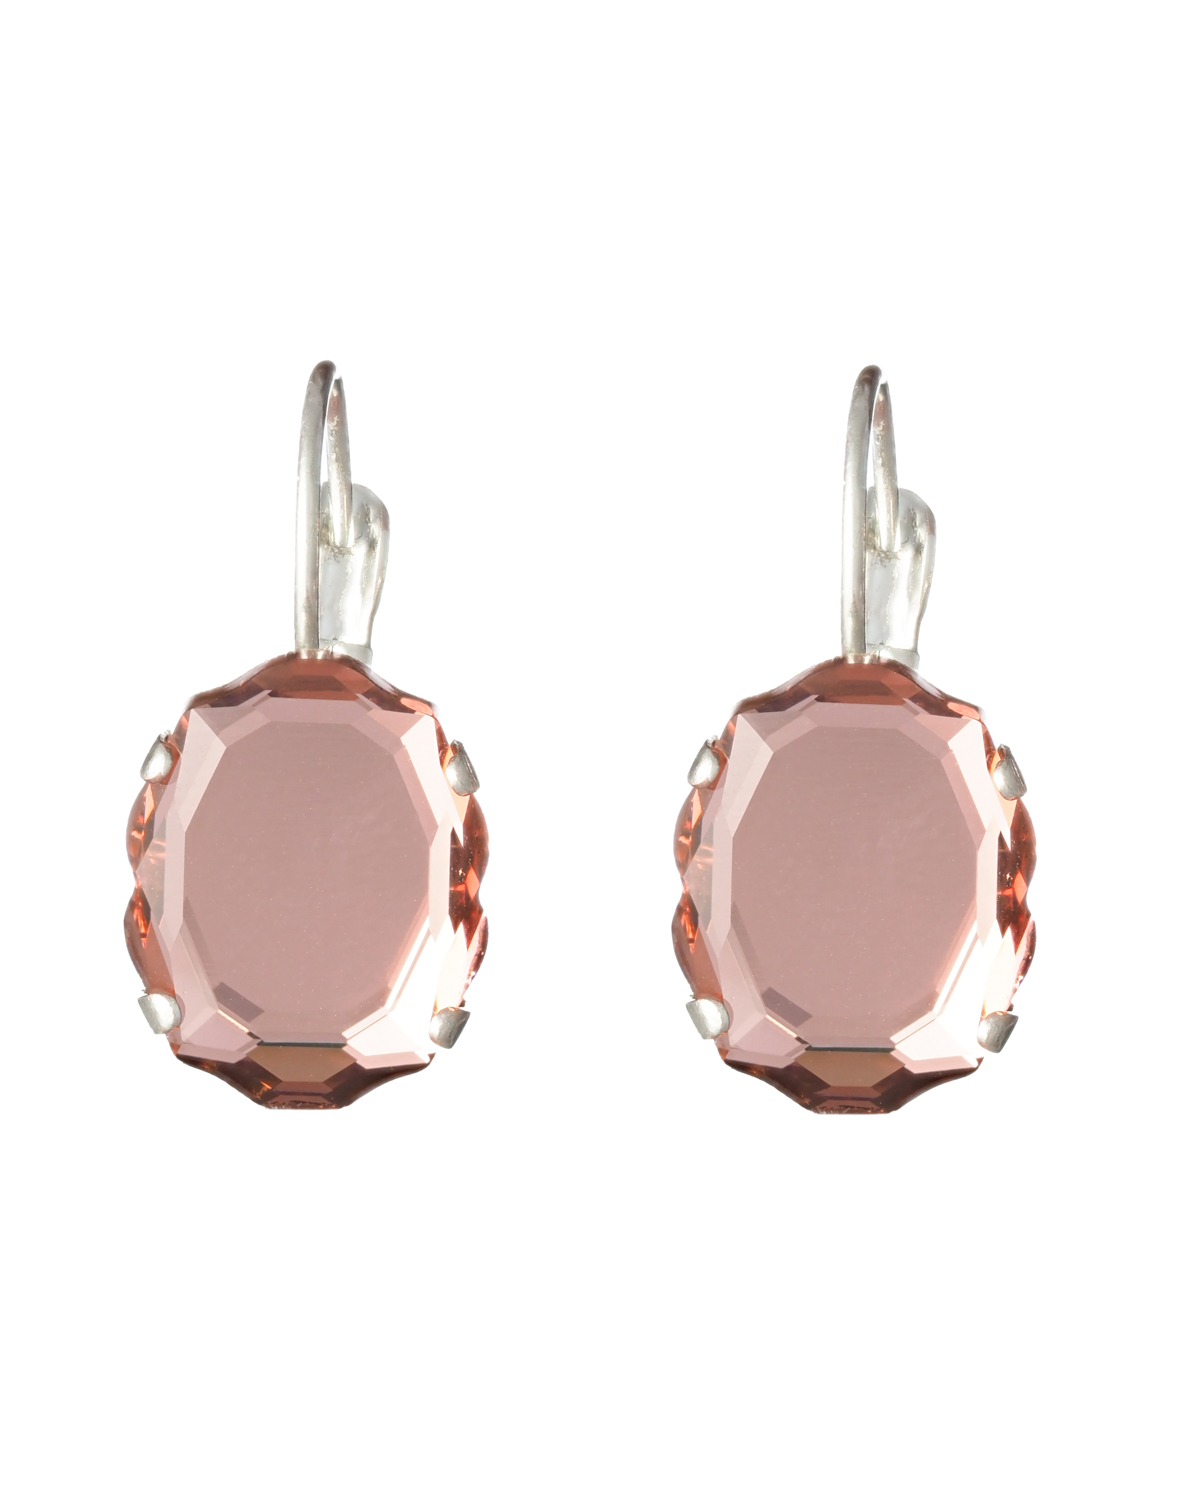 Blush Rose Baroque Mirror Earrings - Rhodium plated